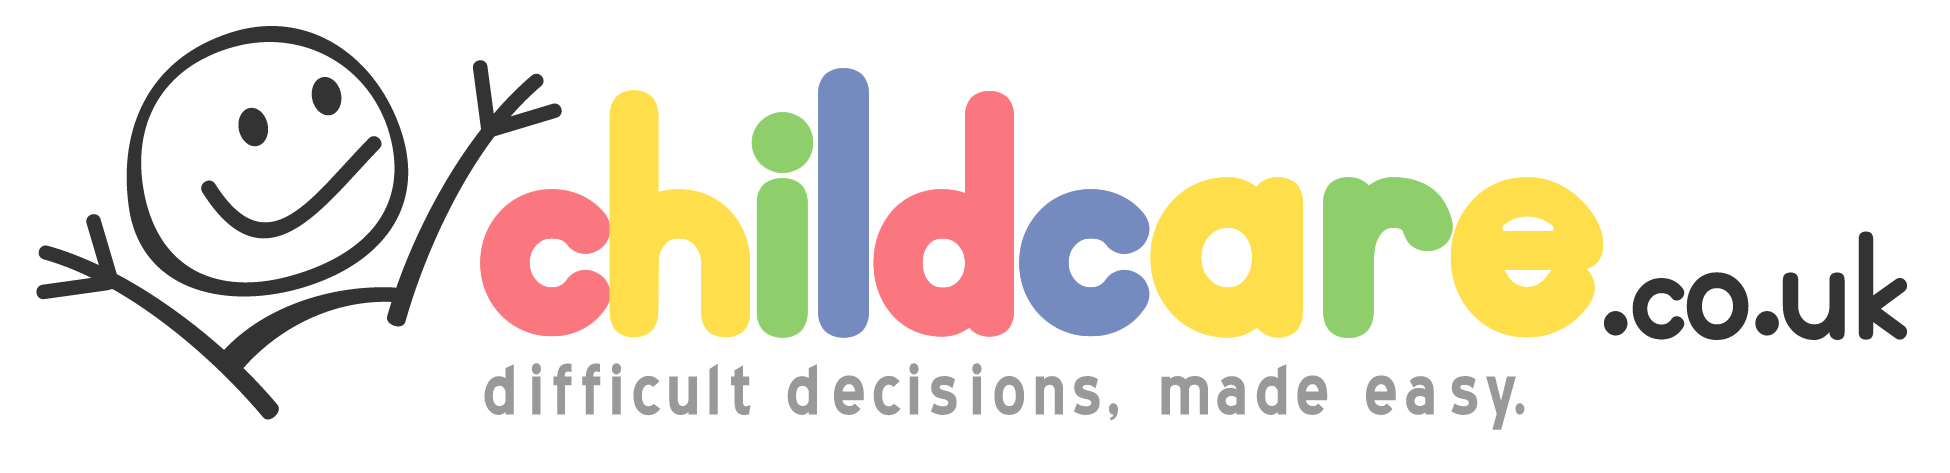 www.childcare.co.uk logo